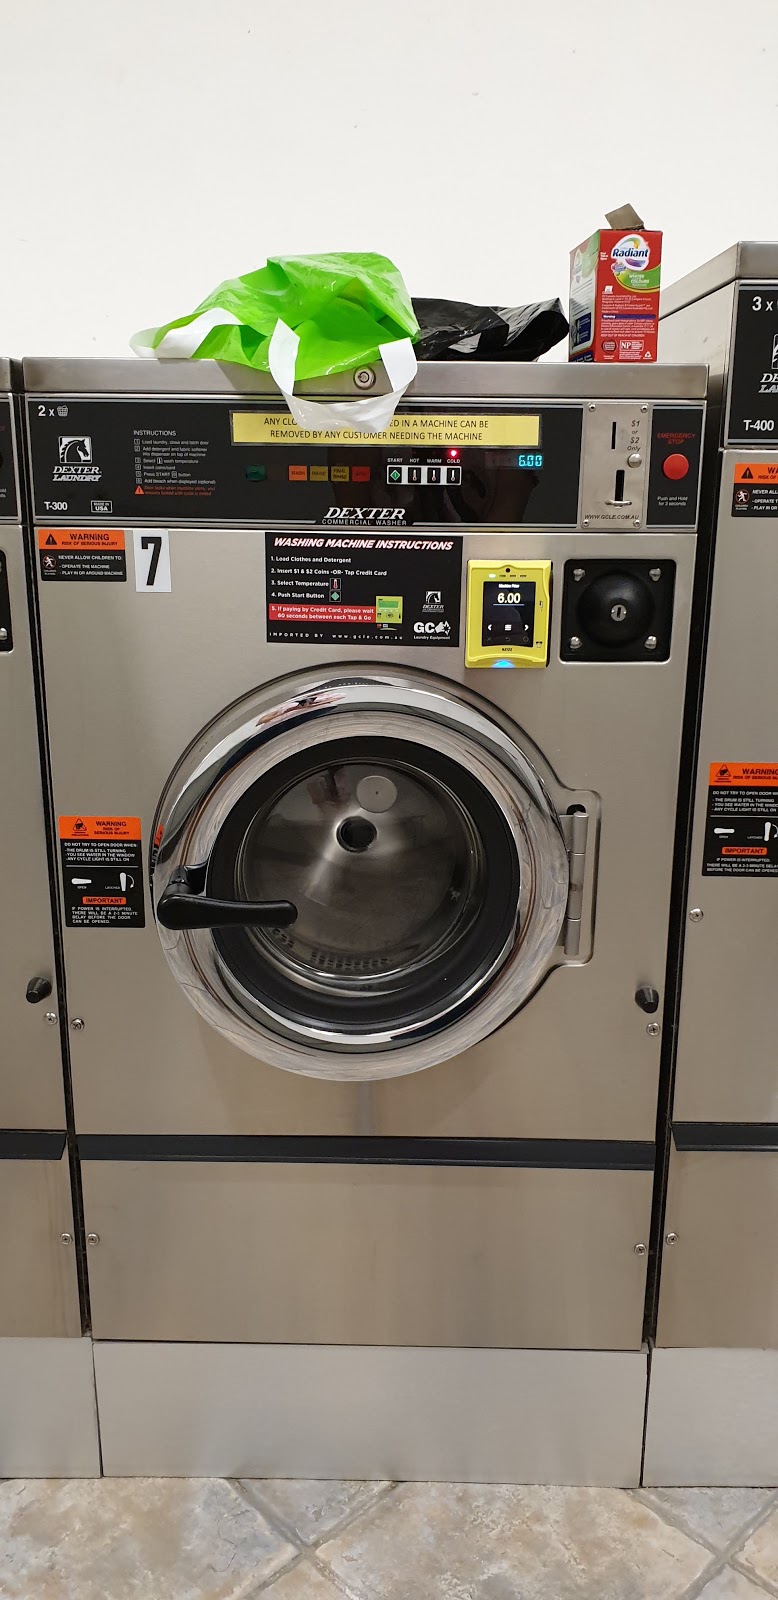 Splash Laundromat Mermaid | laundry | 64 Karbunya St, Mermaid Waters QLD 4218, Australia | 0438169251 OR +61 438 169 251